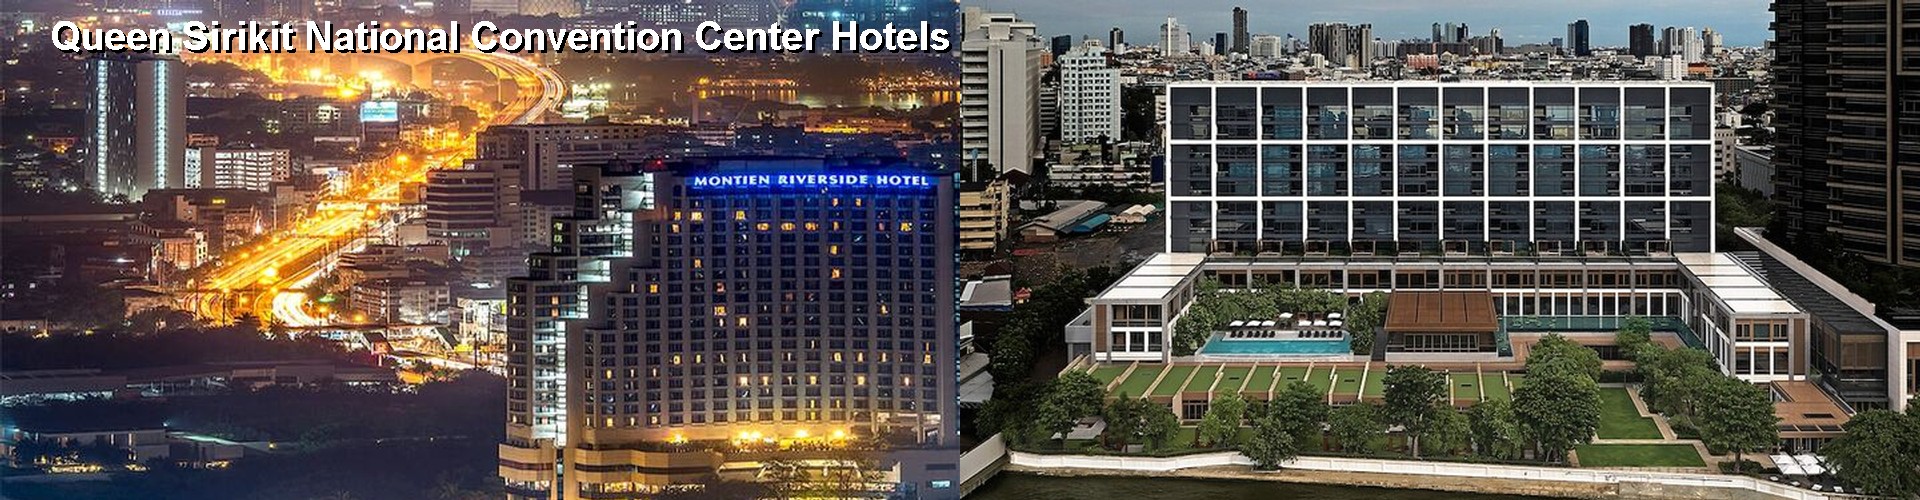 5 Best Hotels near Queen Sirikit National Convention Center